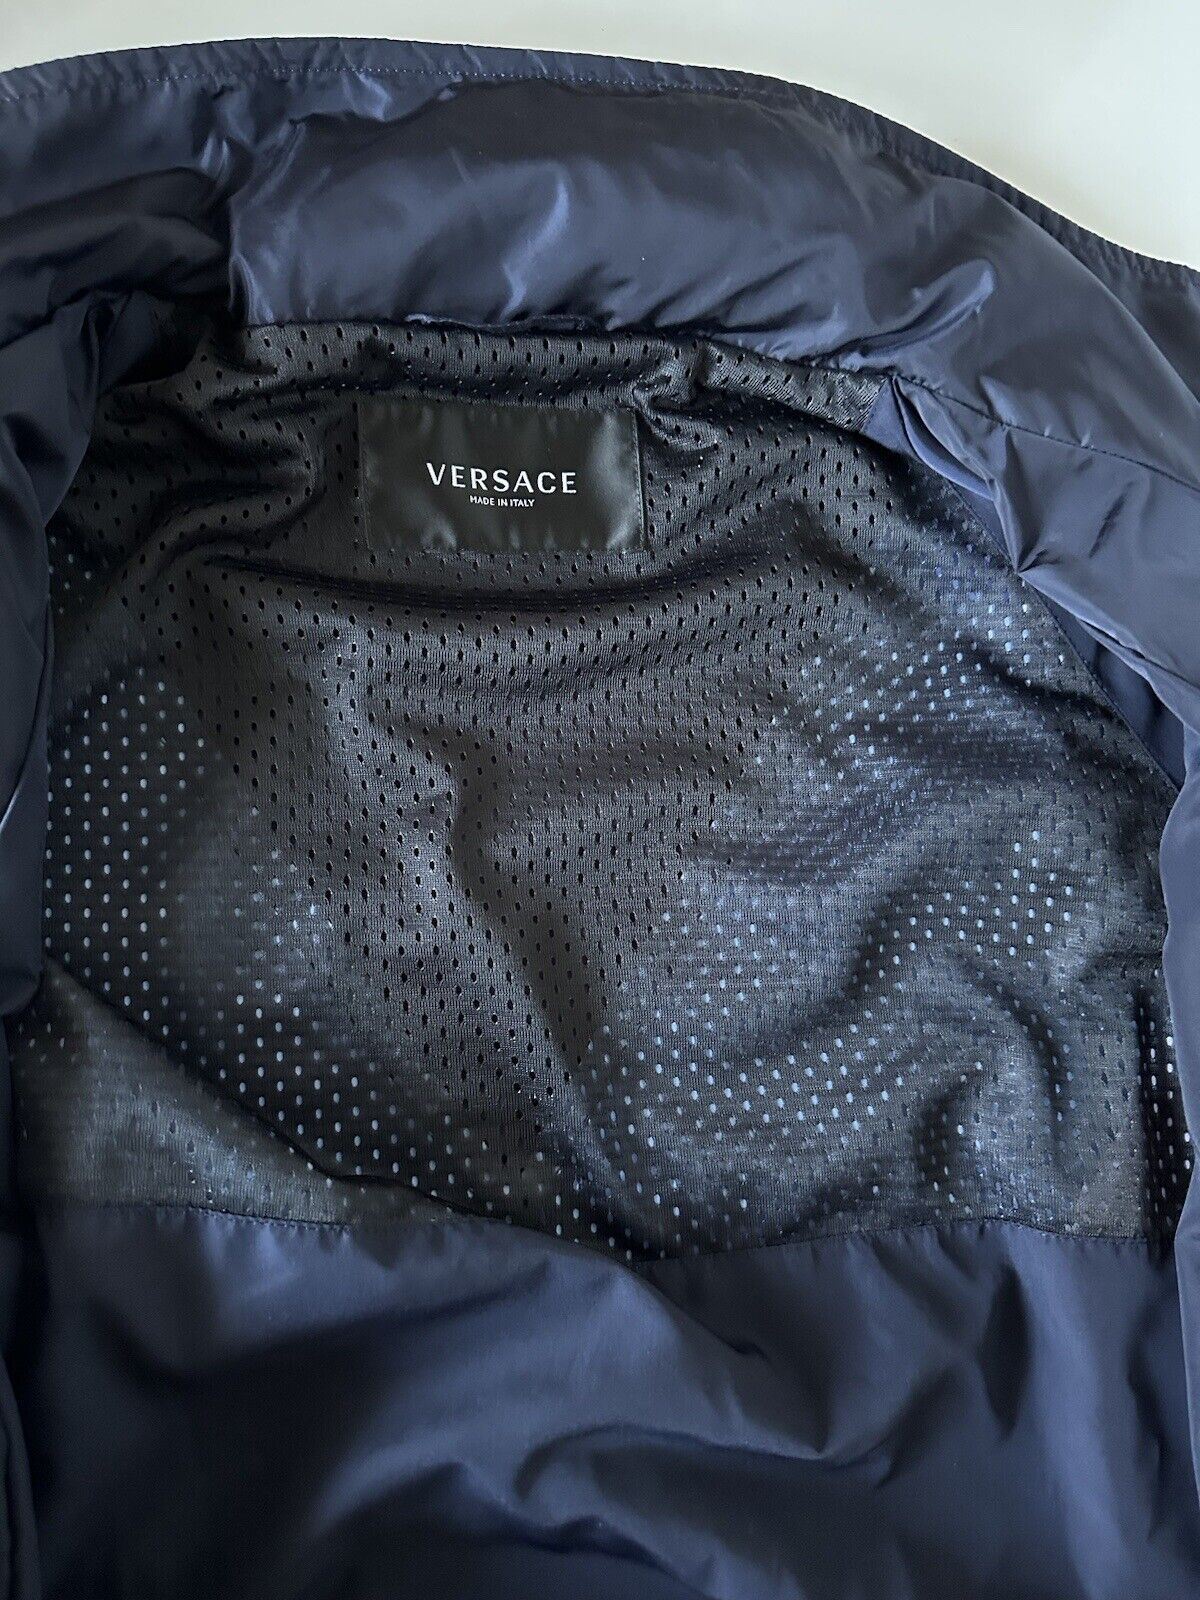 NWT $1295 Versace Mens Nylon Jacket Windbreaker Blue 48 (M - oversized) 1001030